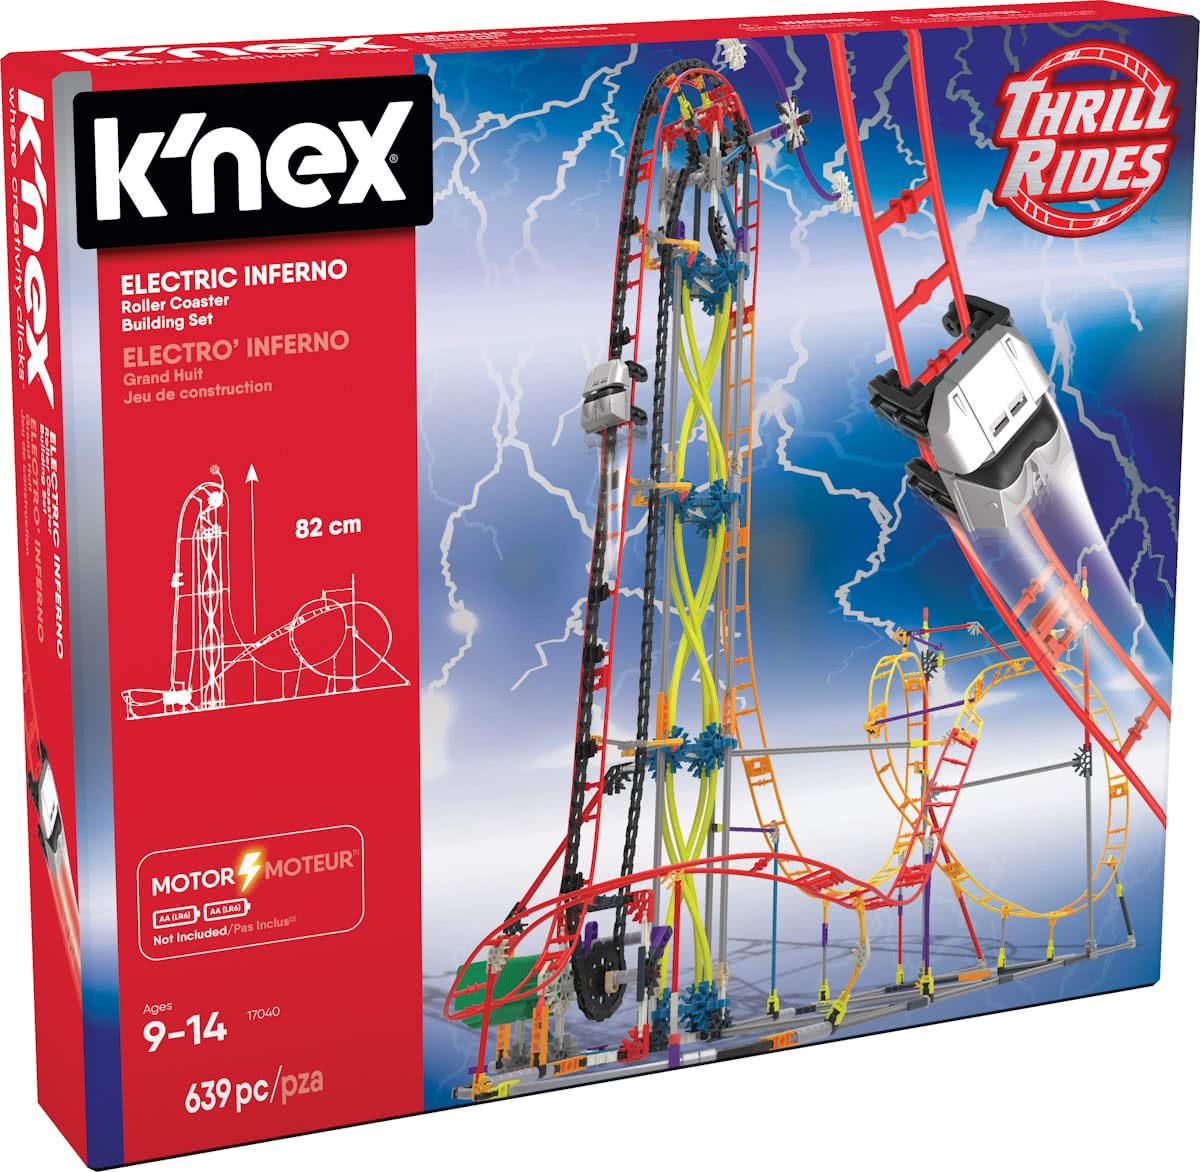 KNEX Electric Inferno - Achtbaan